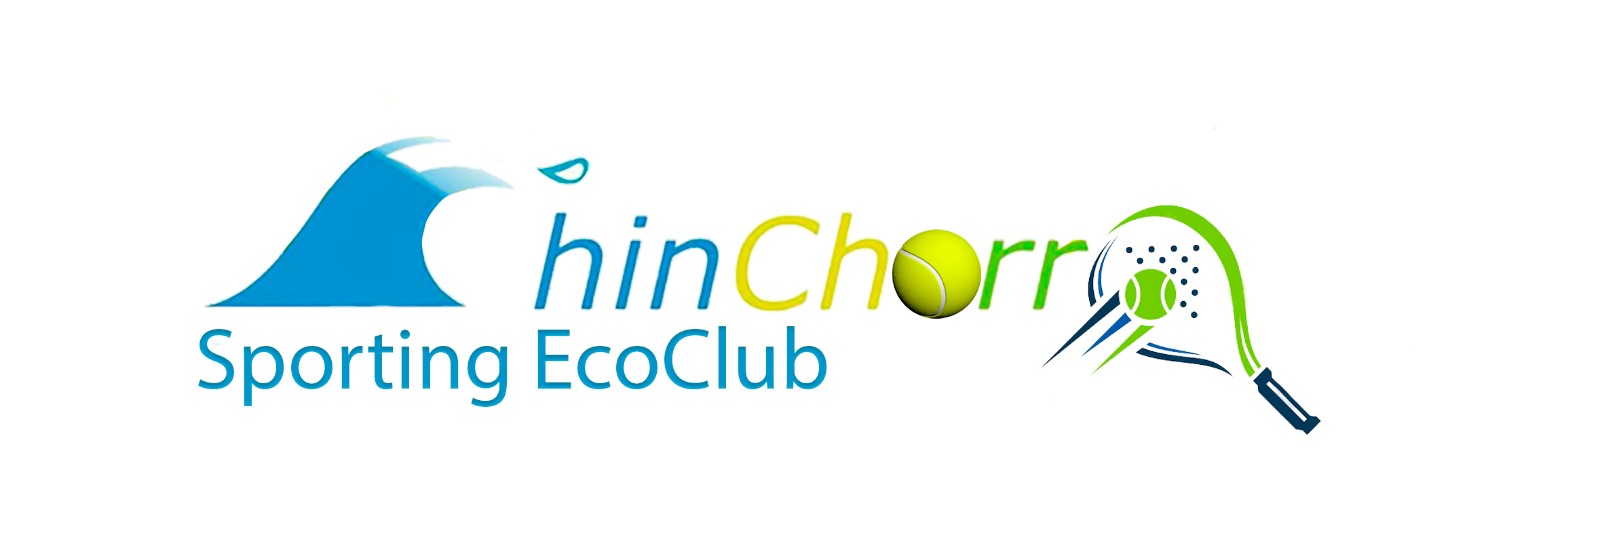 Sporting EcoClub